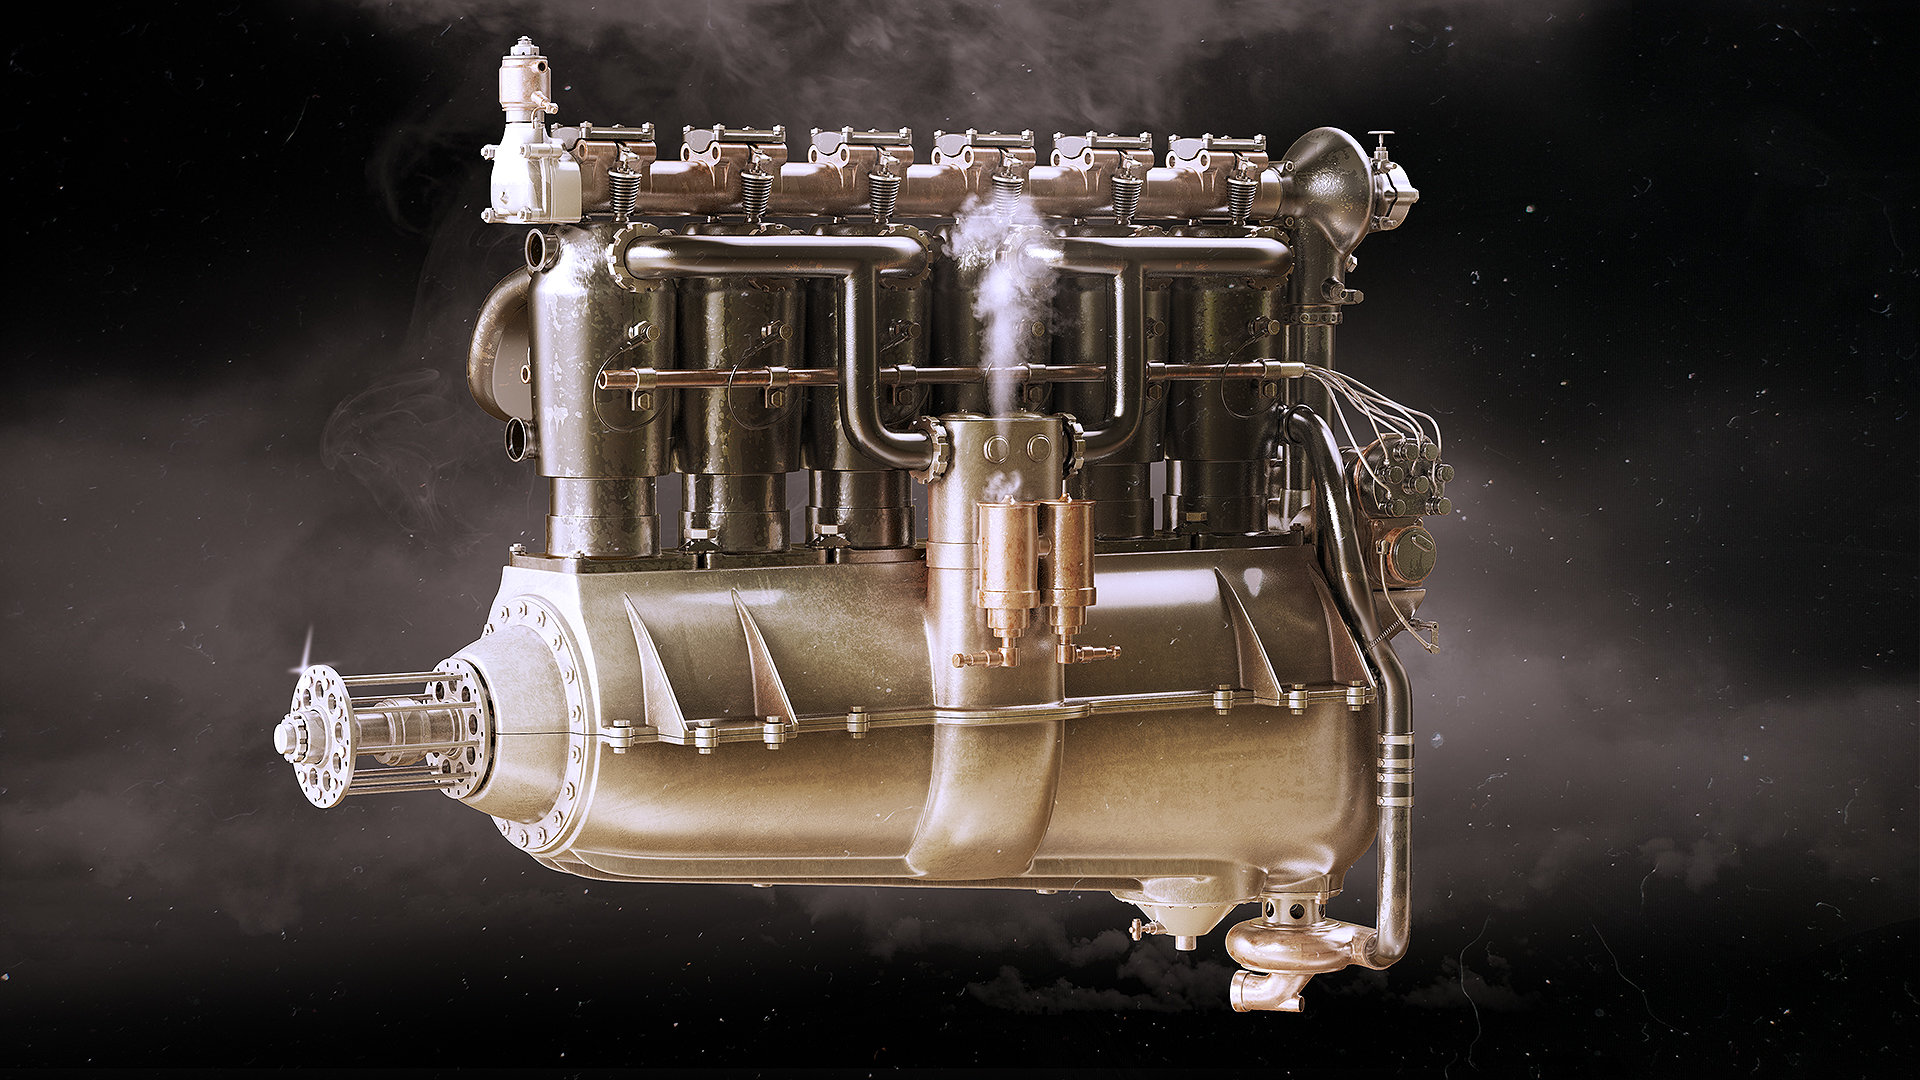 alexandr-novitskiy-mercedes-diii-engine-01.jpg?1438781018